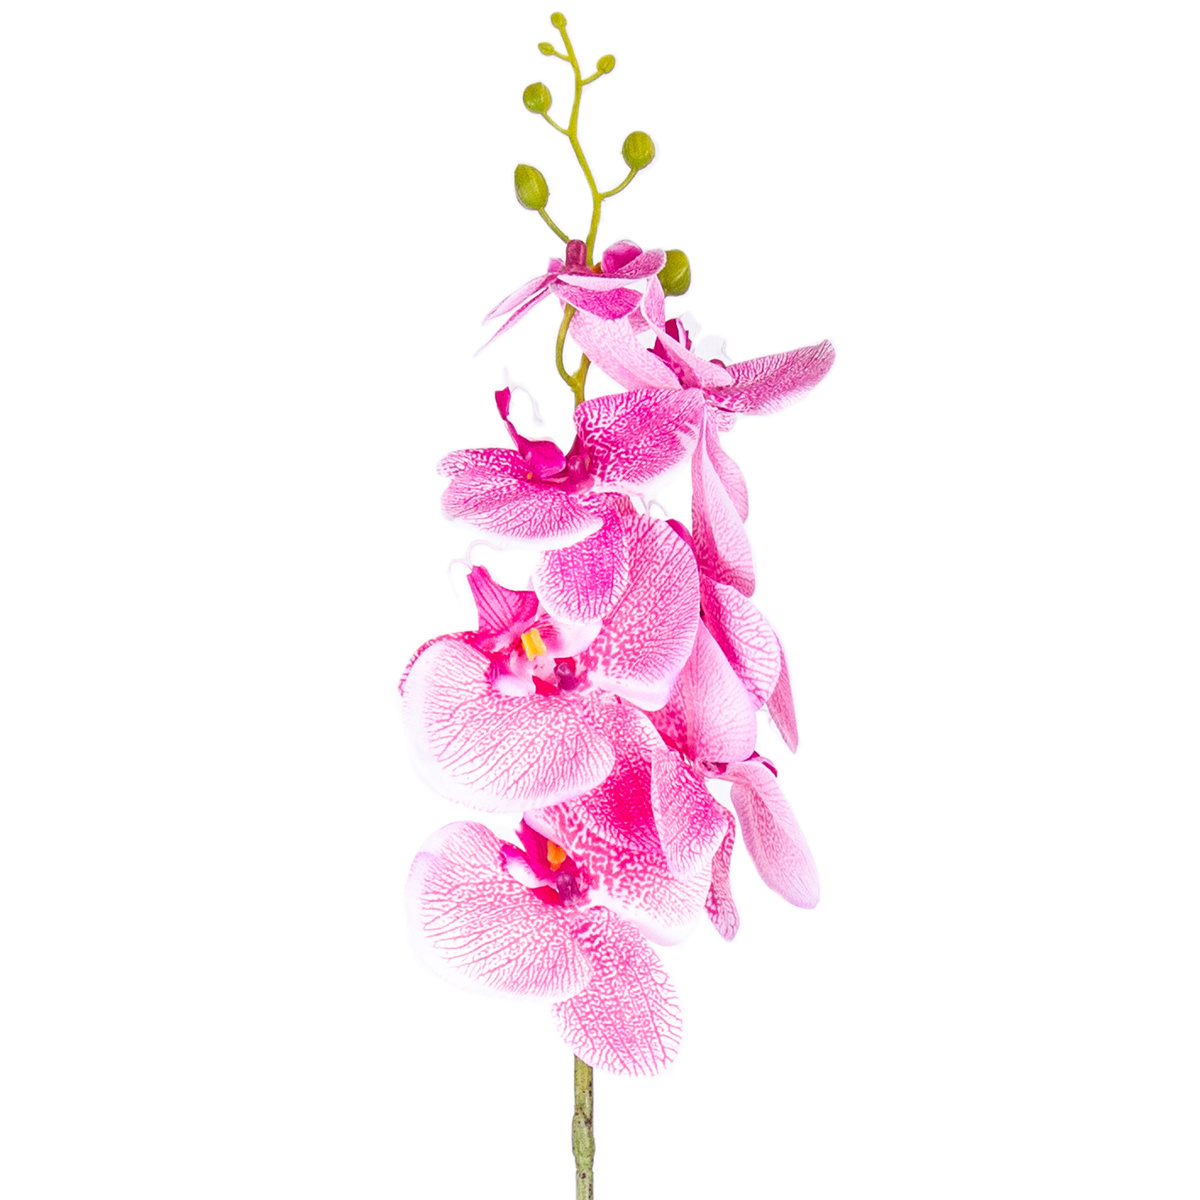 Umělá Orchidej tm. růžová, 86 cm